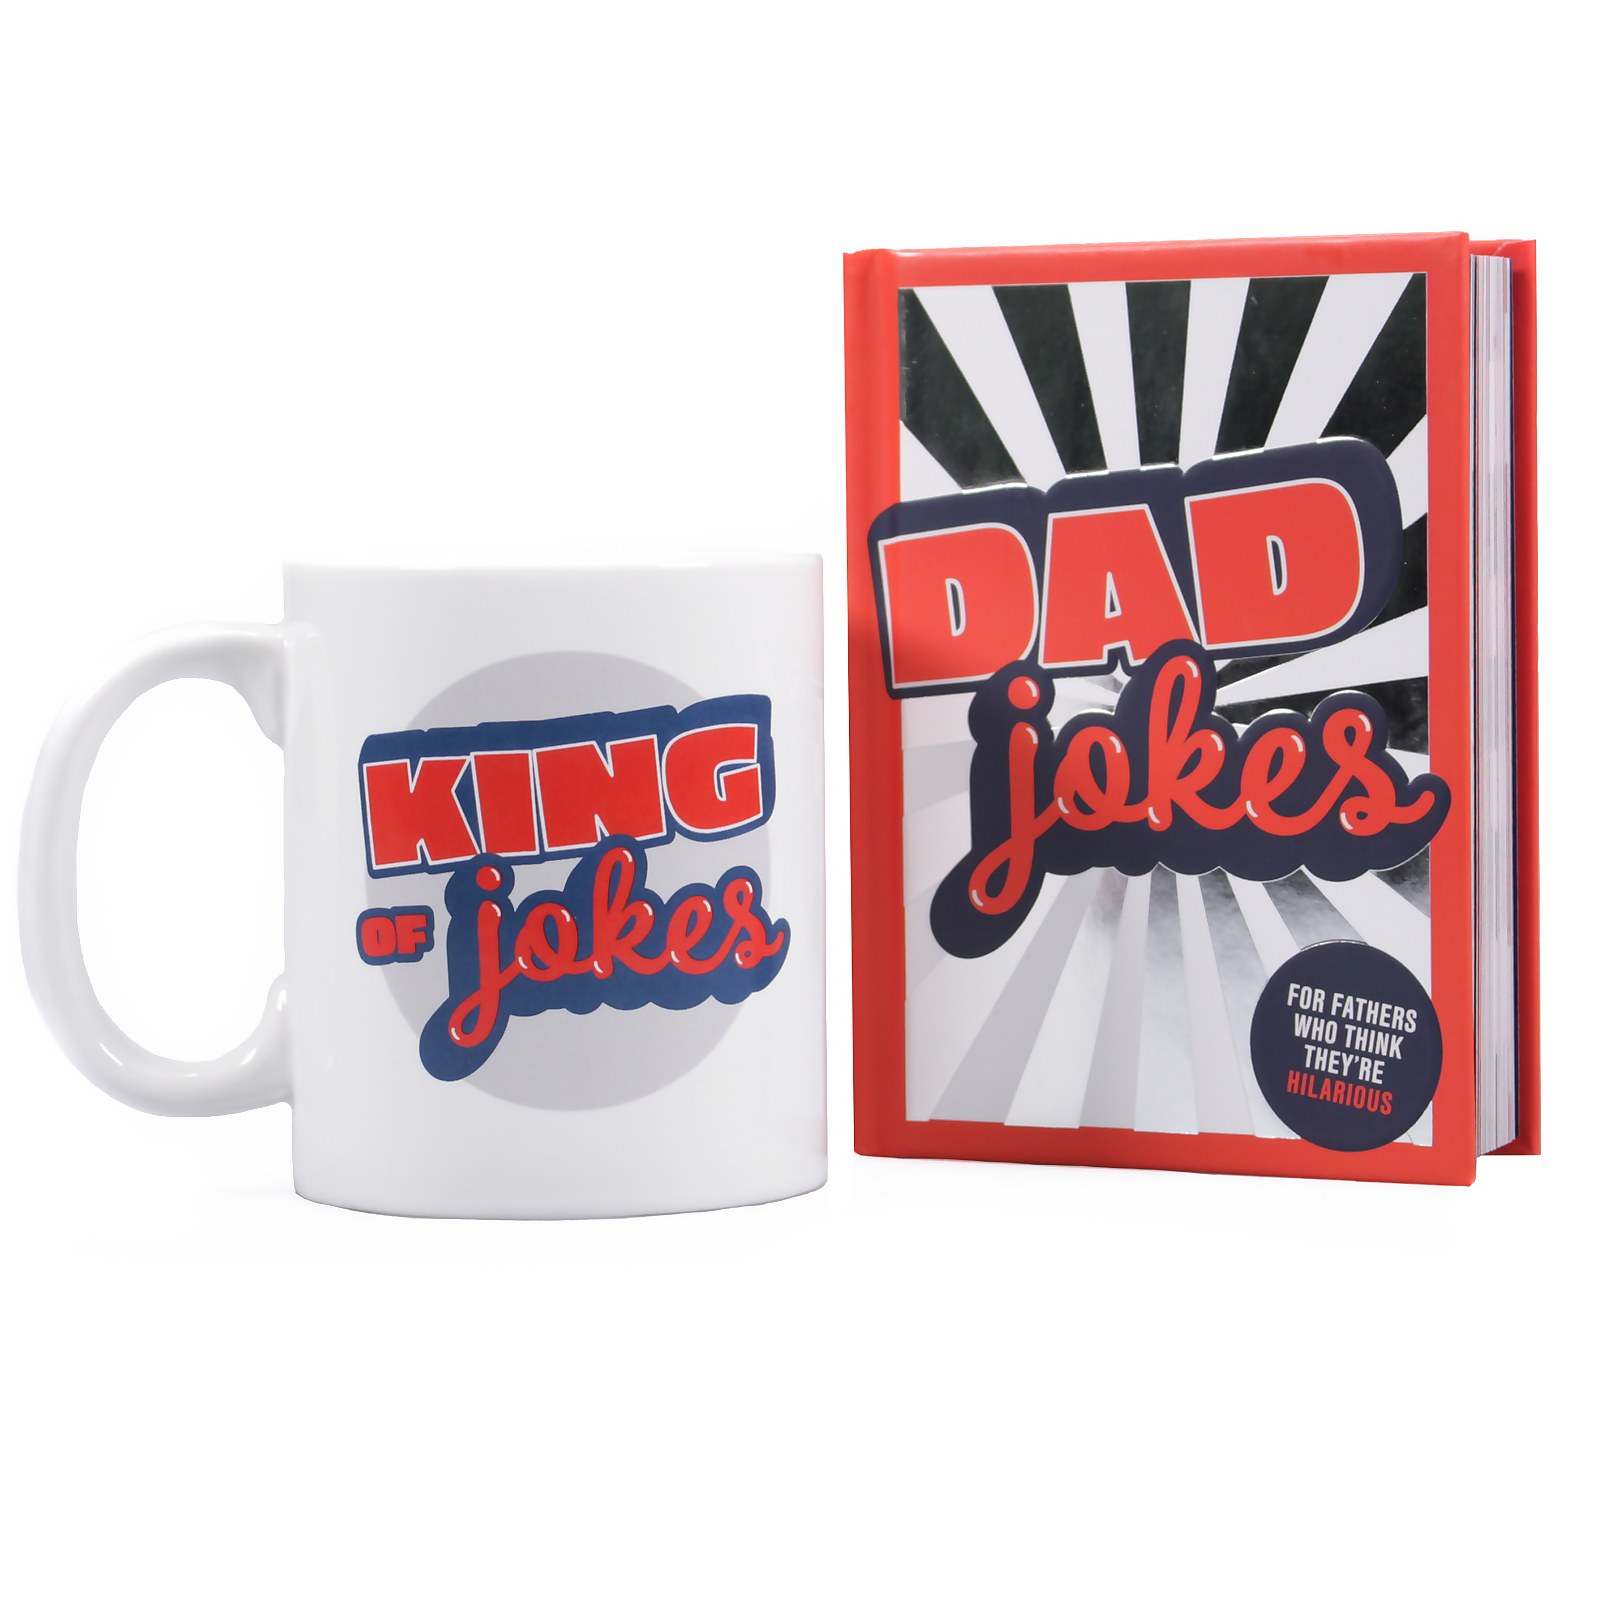 Dad Jokes Book and Mug Set